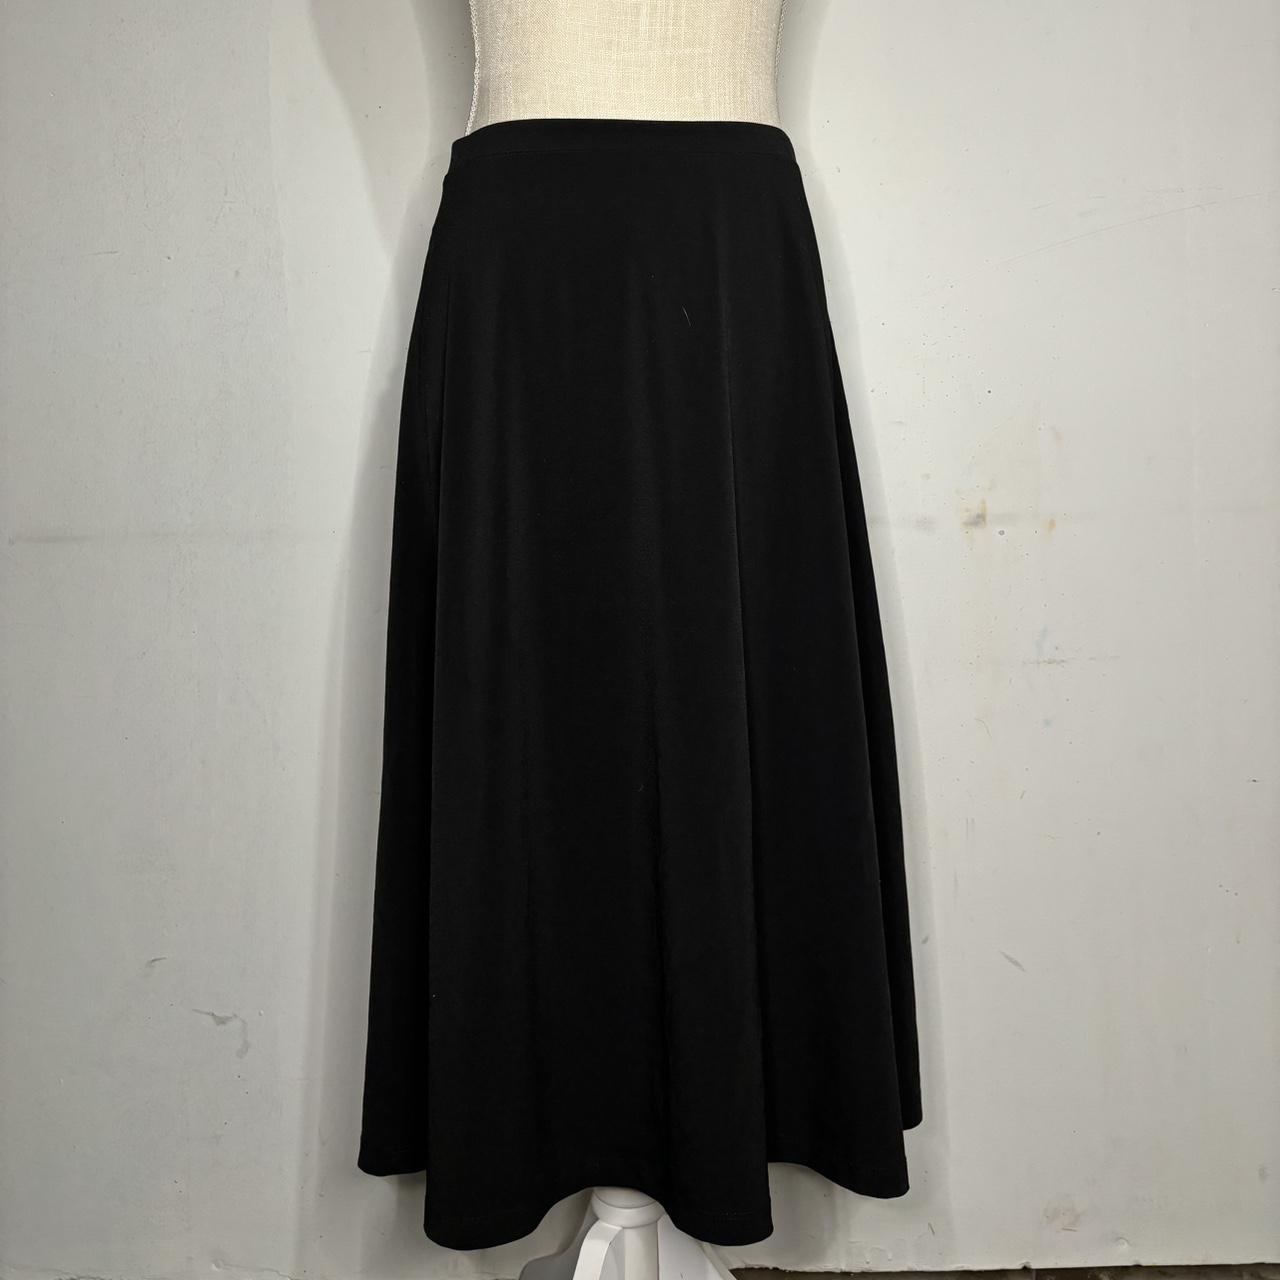 Nice everyday black skirt - Depop